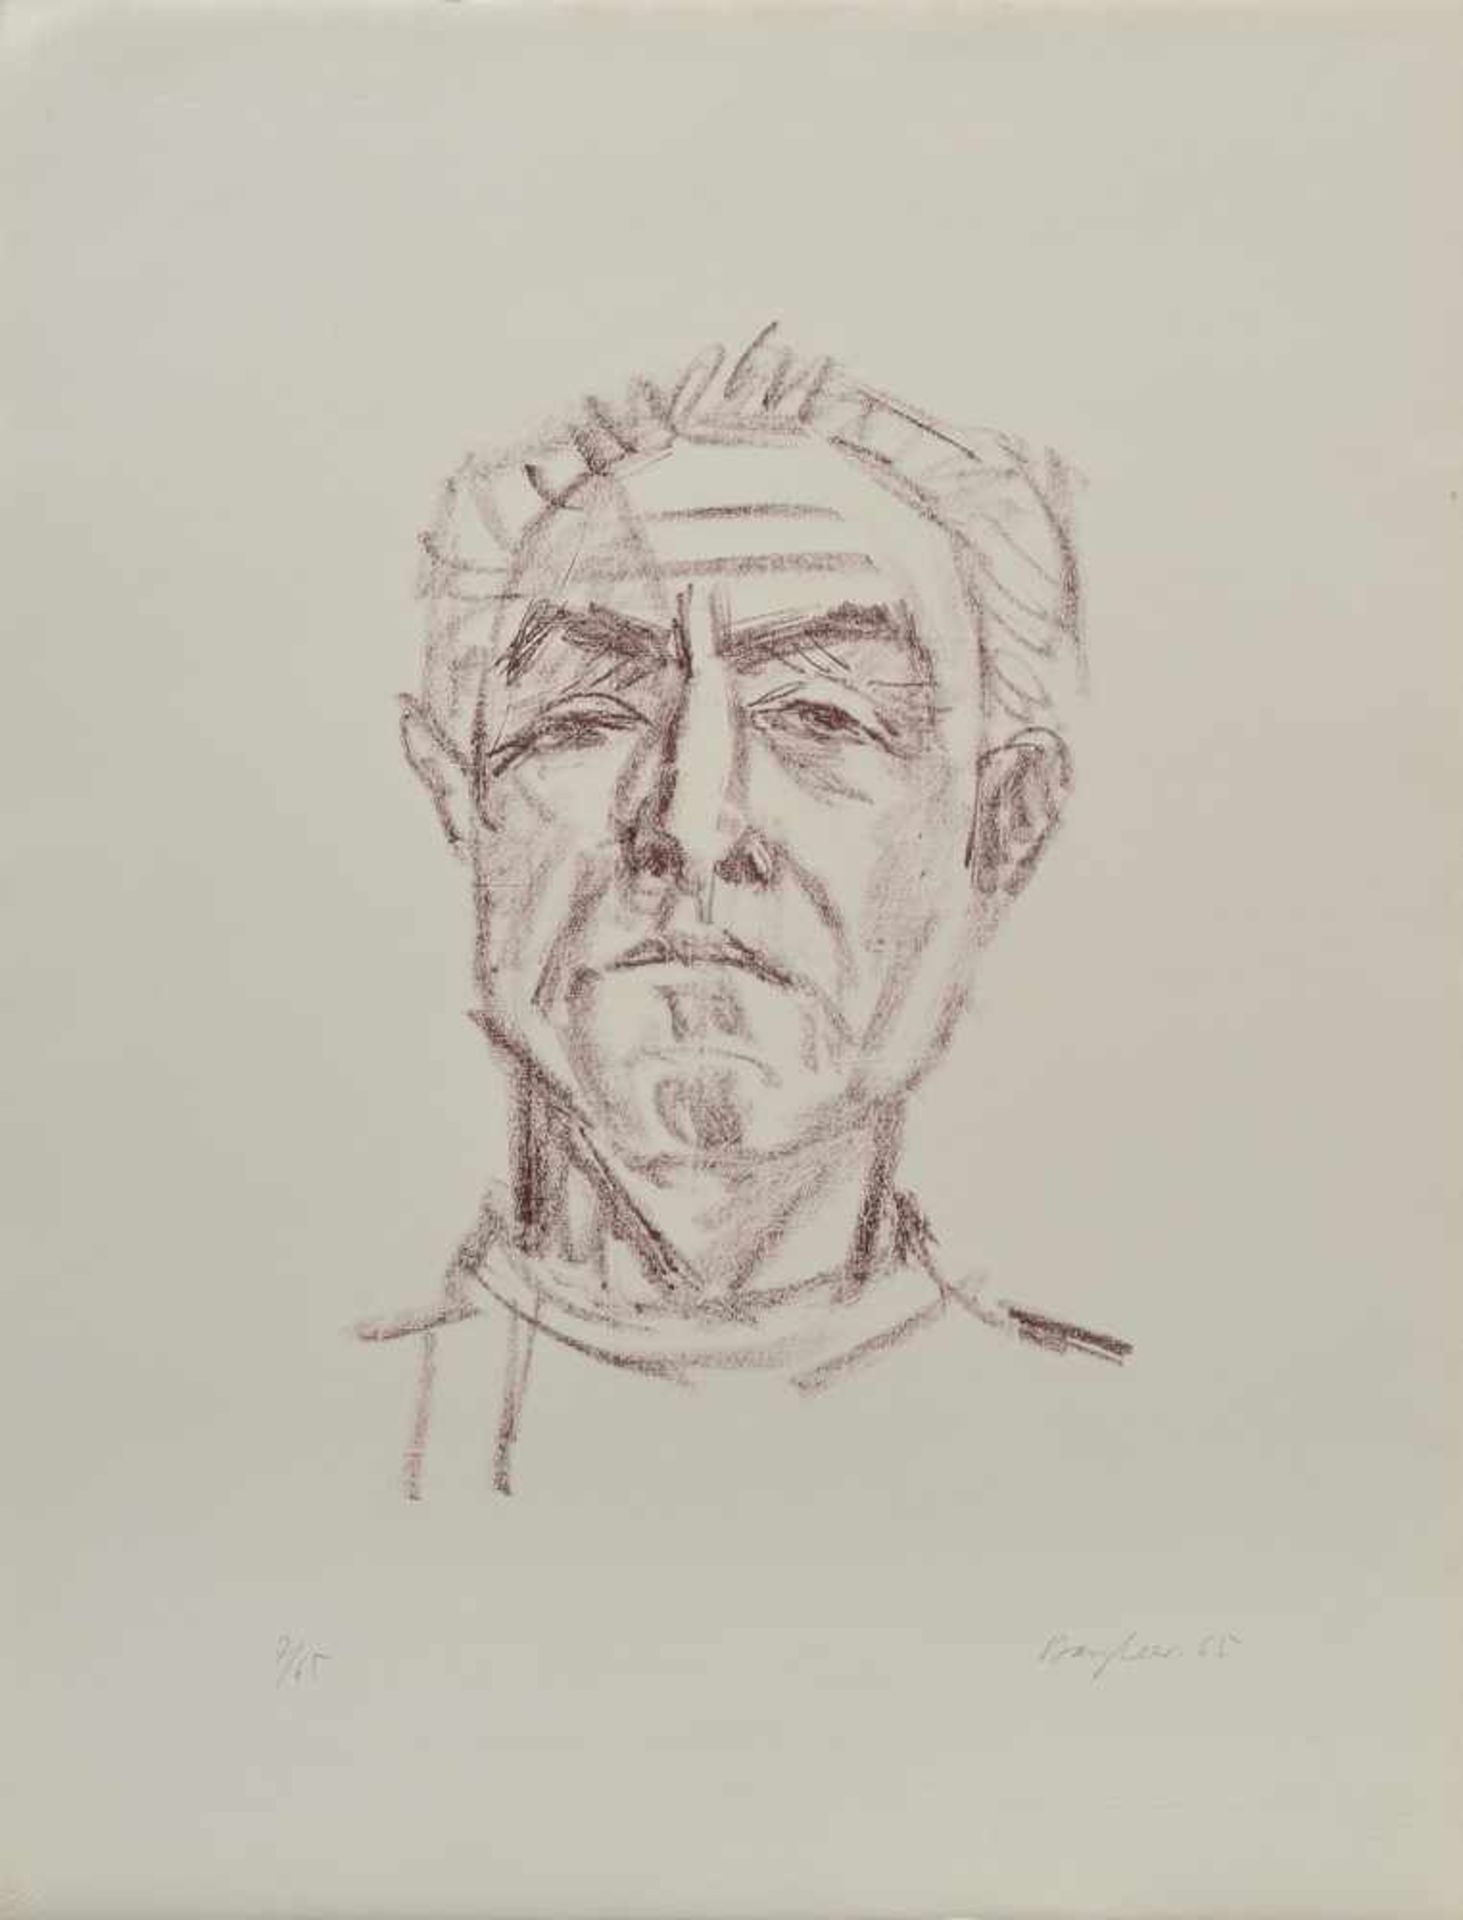 Bargheer, Eduard (1901-1971) "Selbstbildnis aus Europäische Graphik IV", Lithographie/Papier,